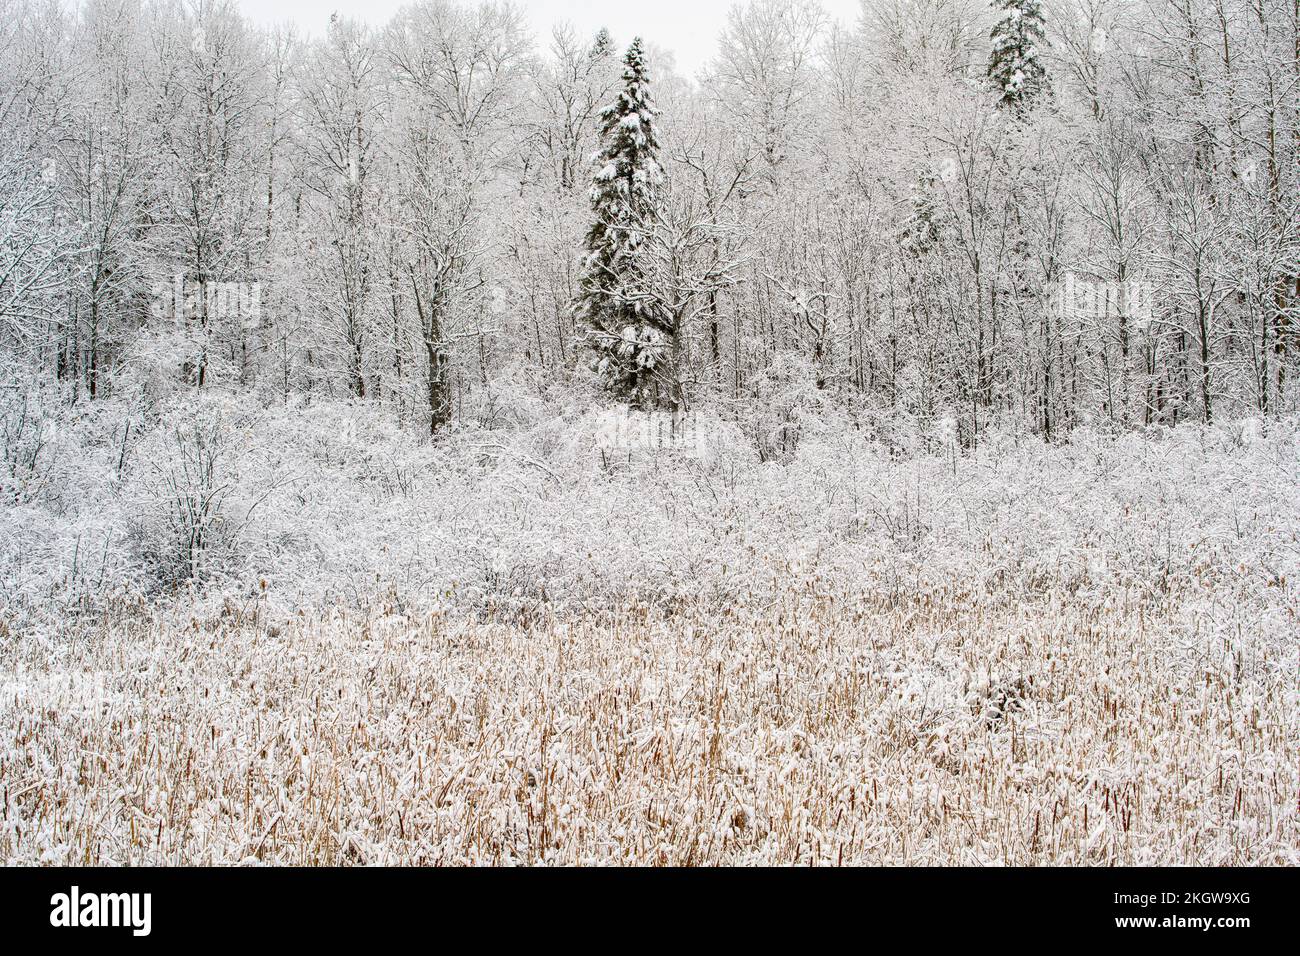 Marsh vegetation in early snow, Greater Sudbury, Ontario, Canada Stock Photo